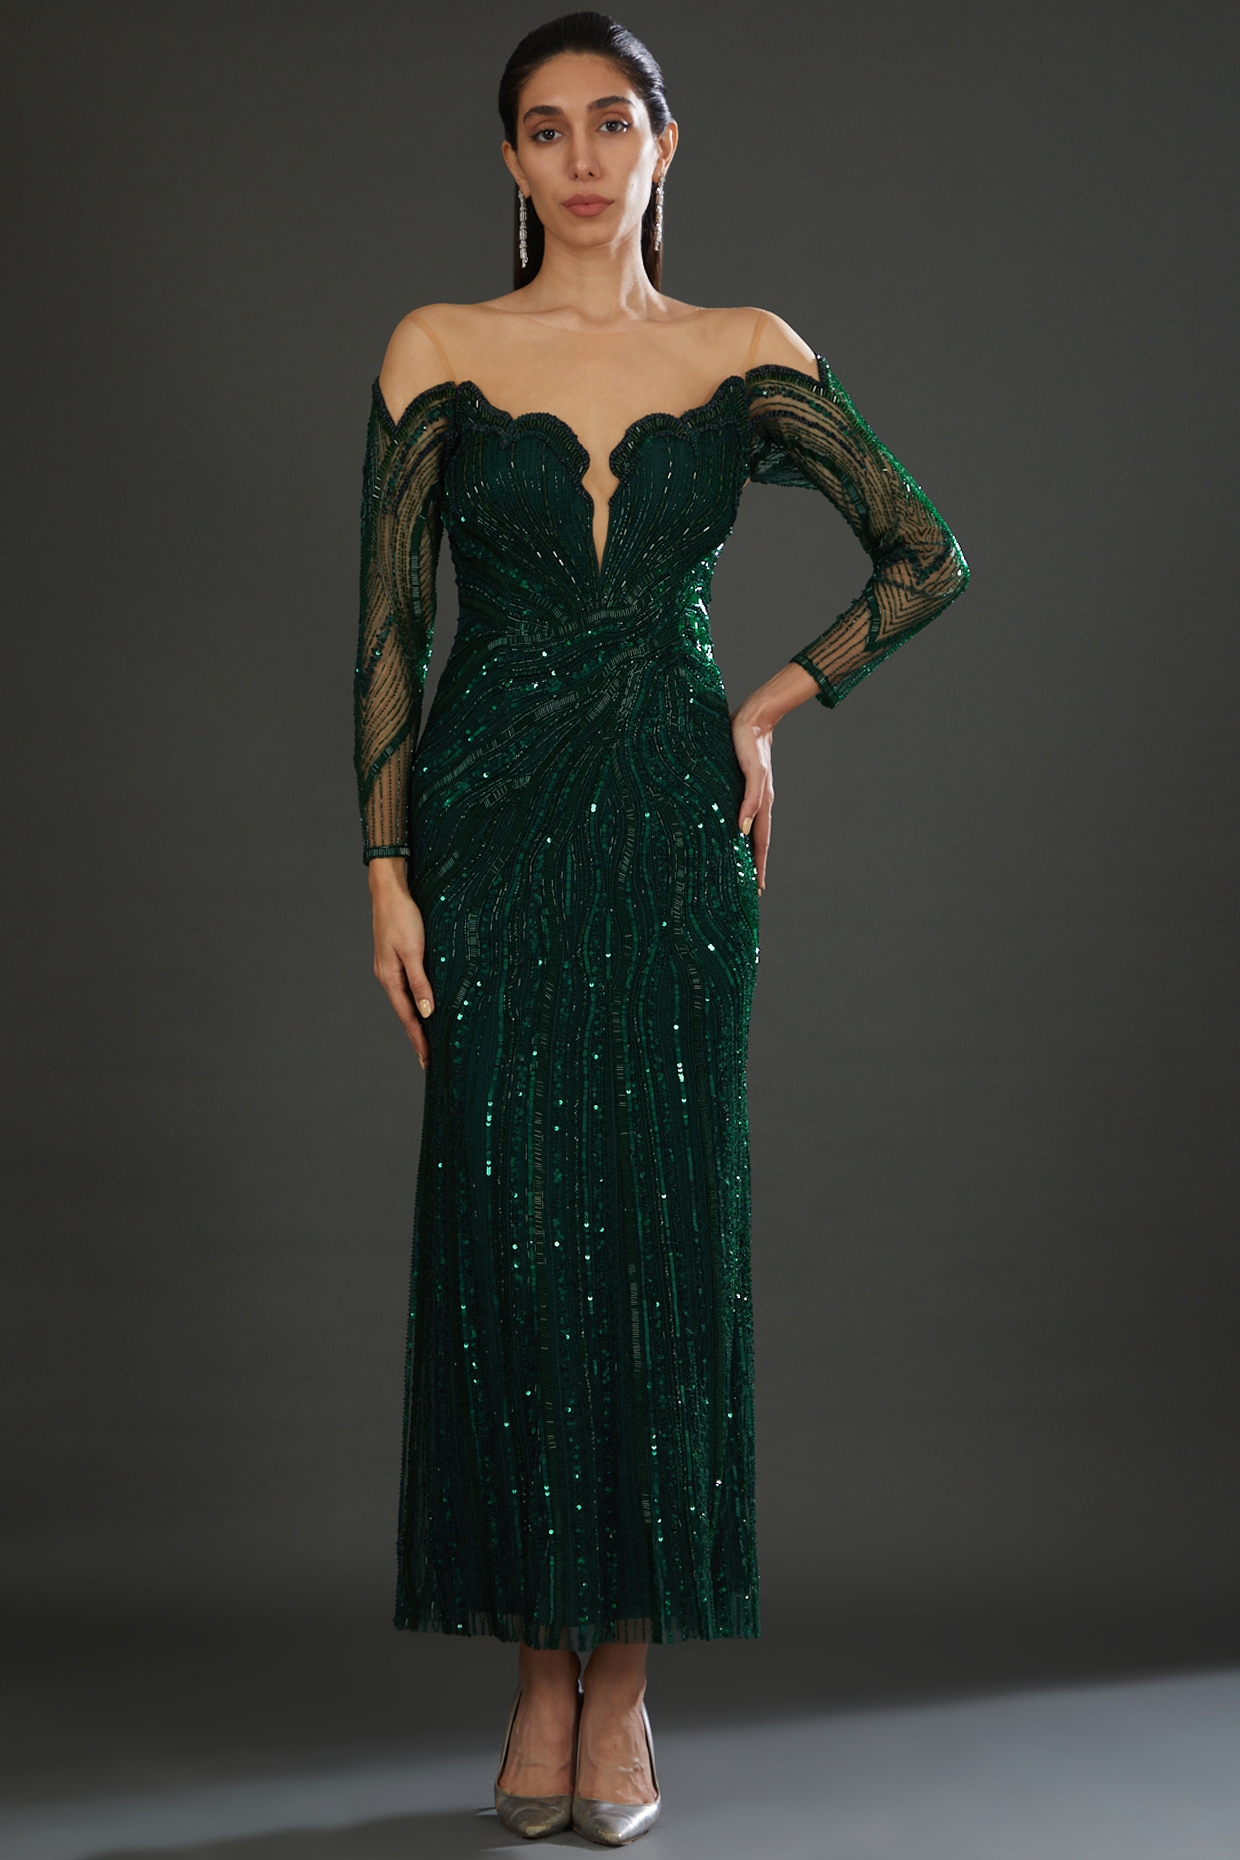 Buy Emerald Green Dress Plus Size Lace Design online | Lazada.com.ph